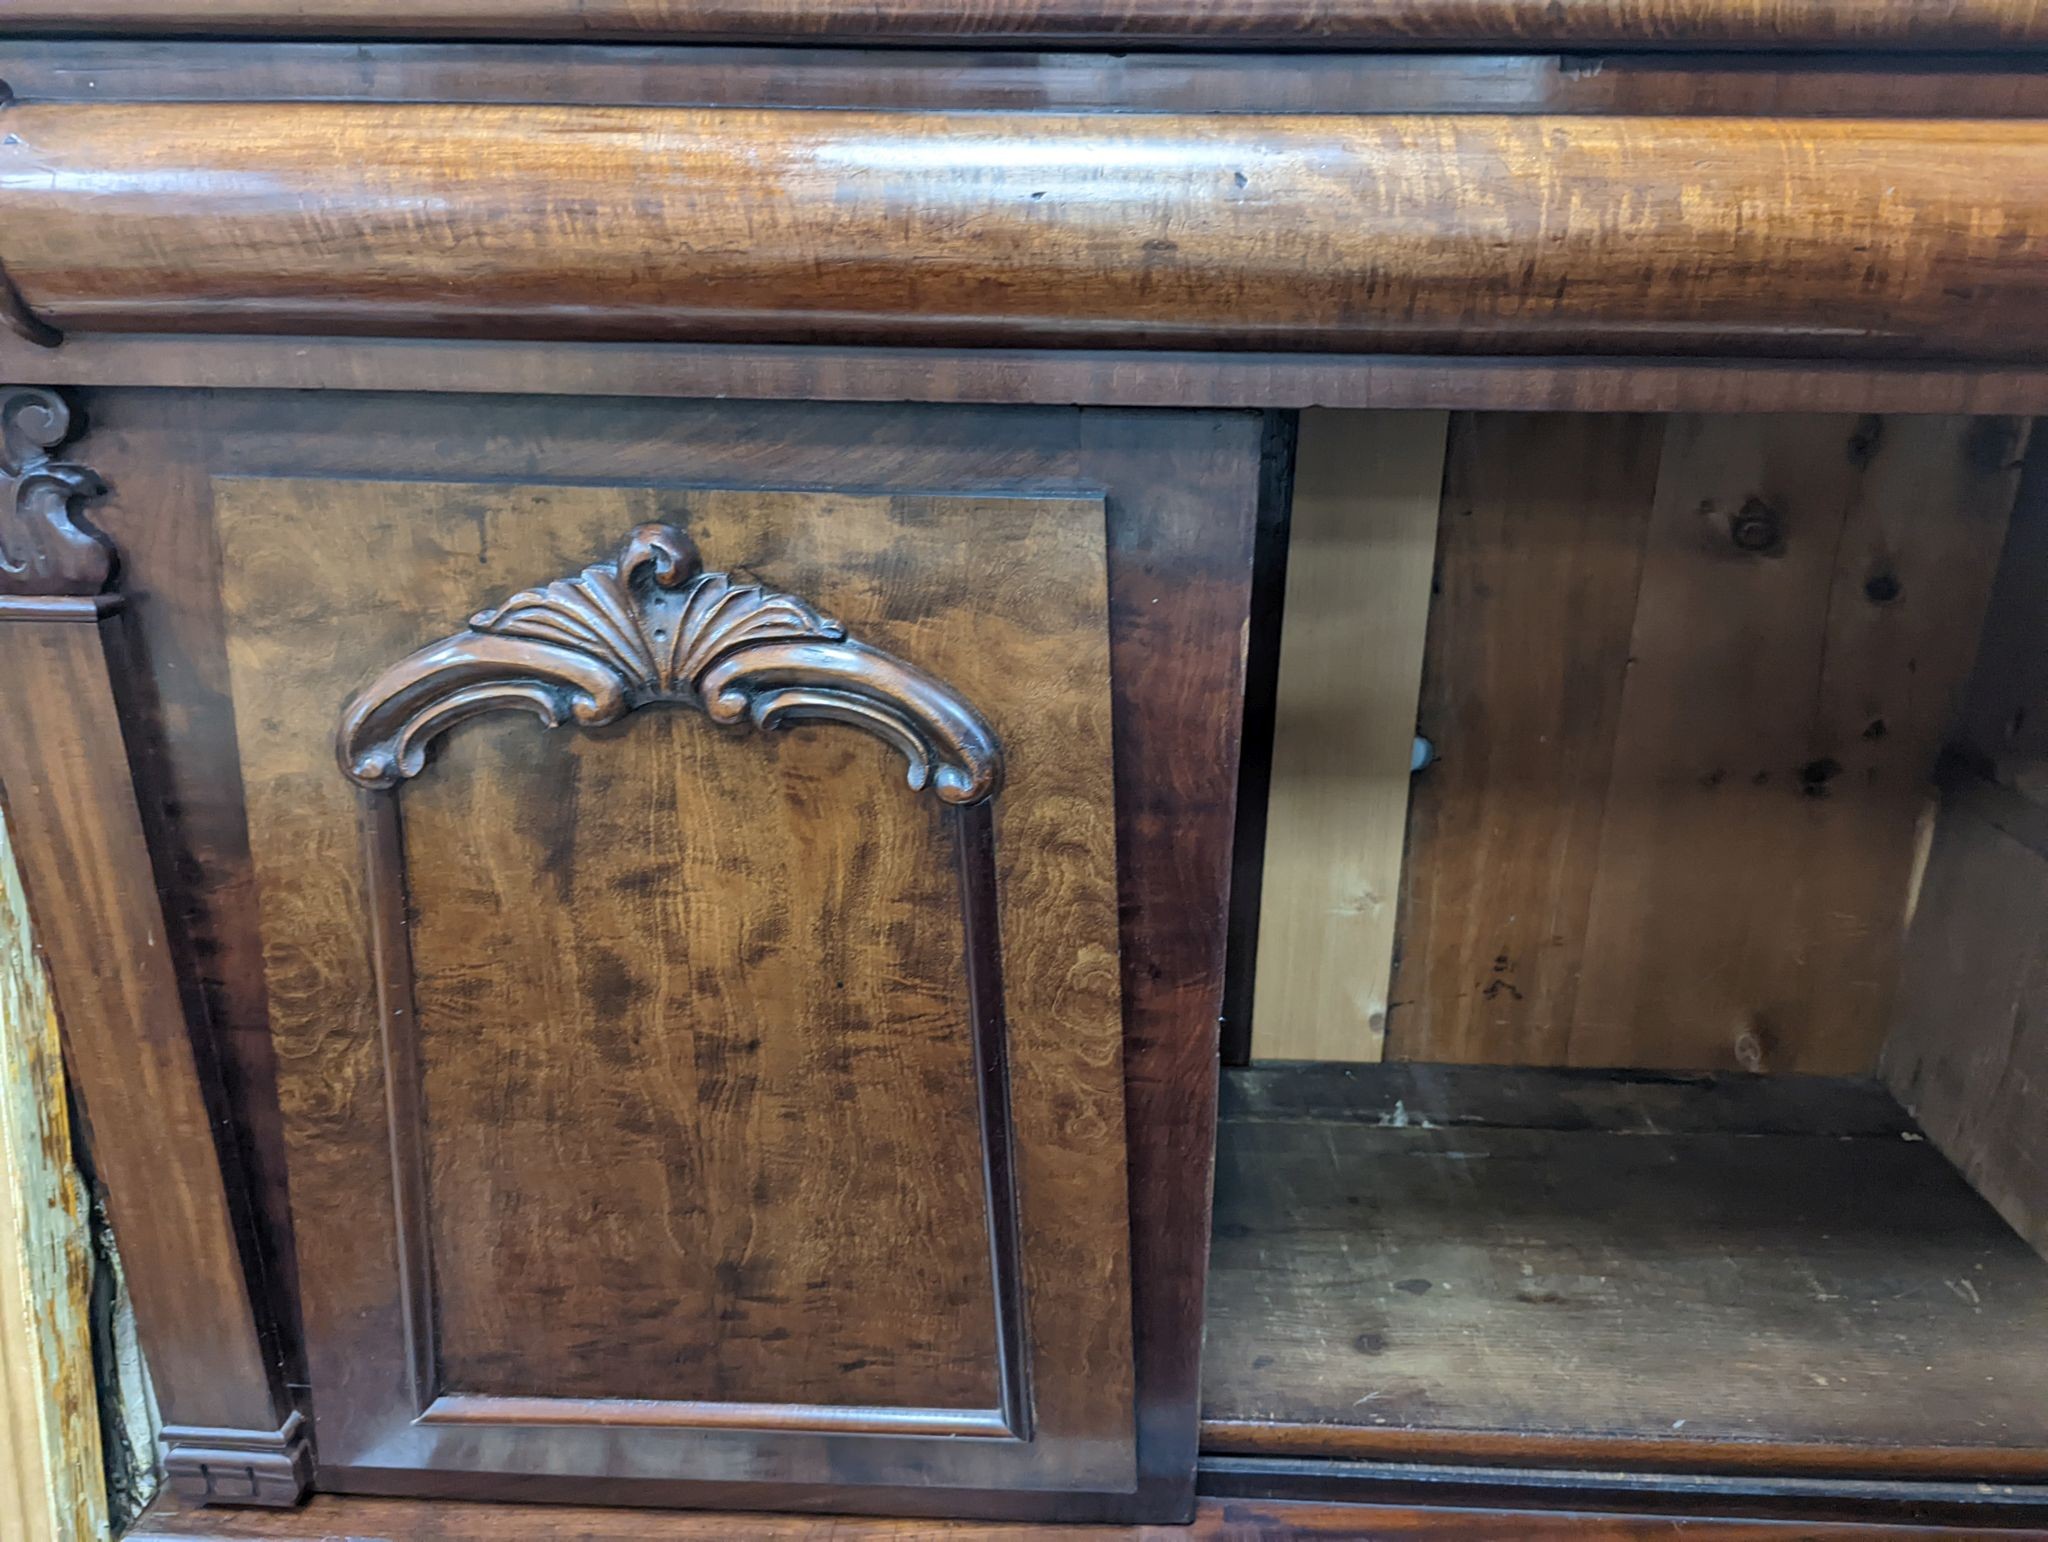 A mid Victorian mahogany bookcase, width 130cm, depth 54cm, height 230cm